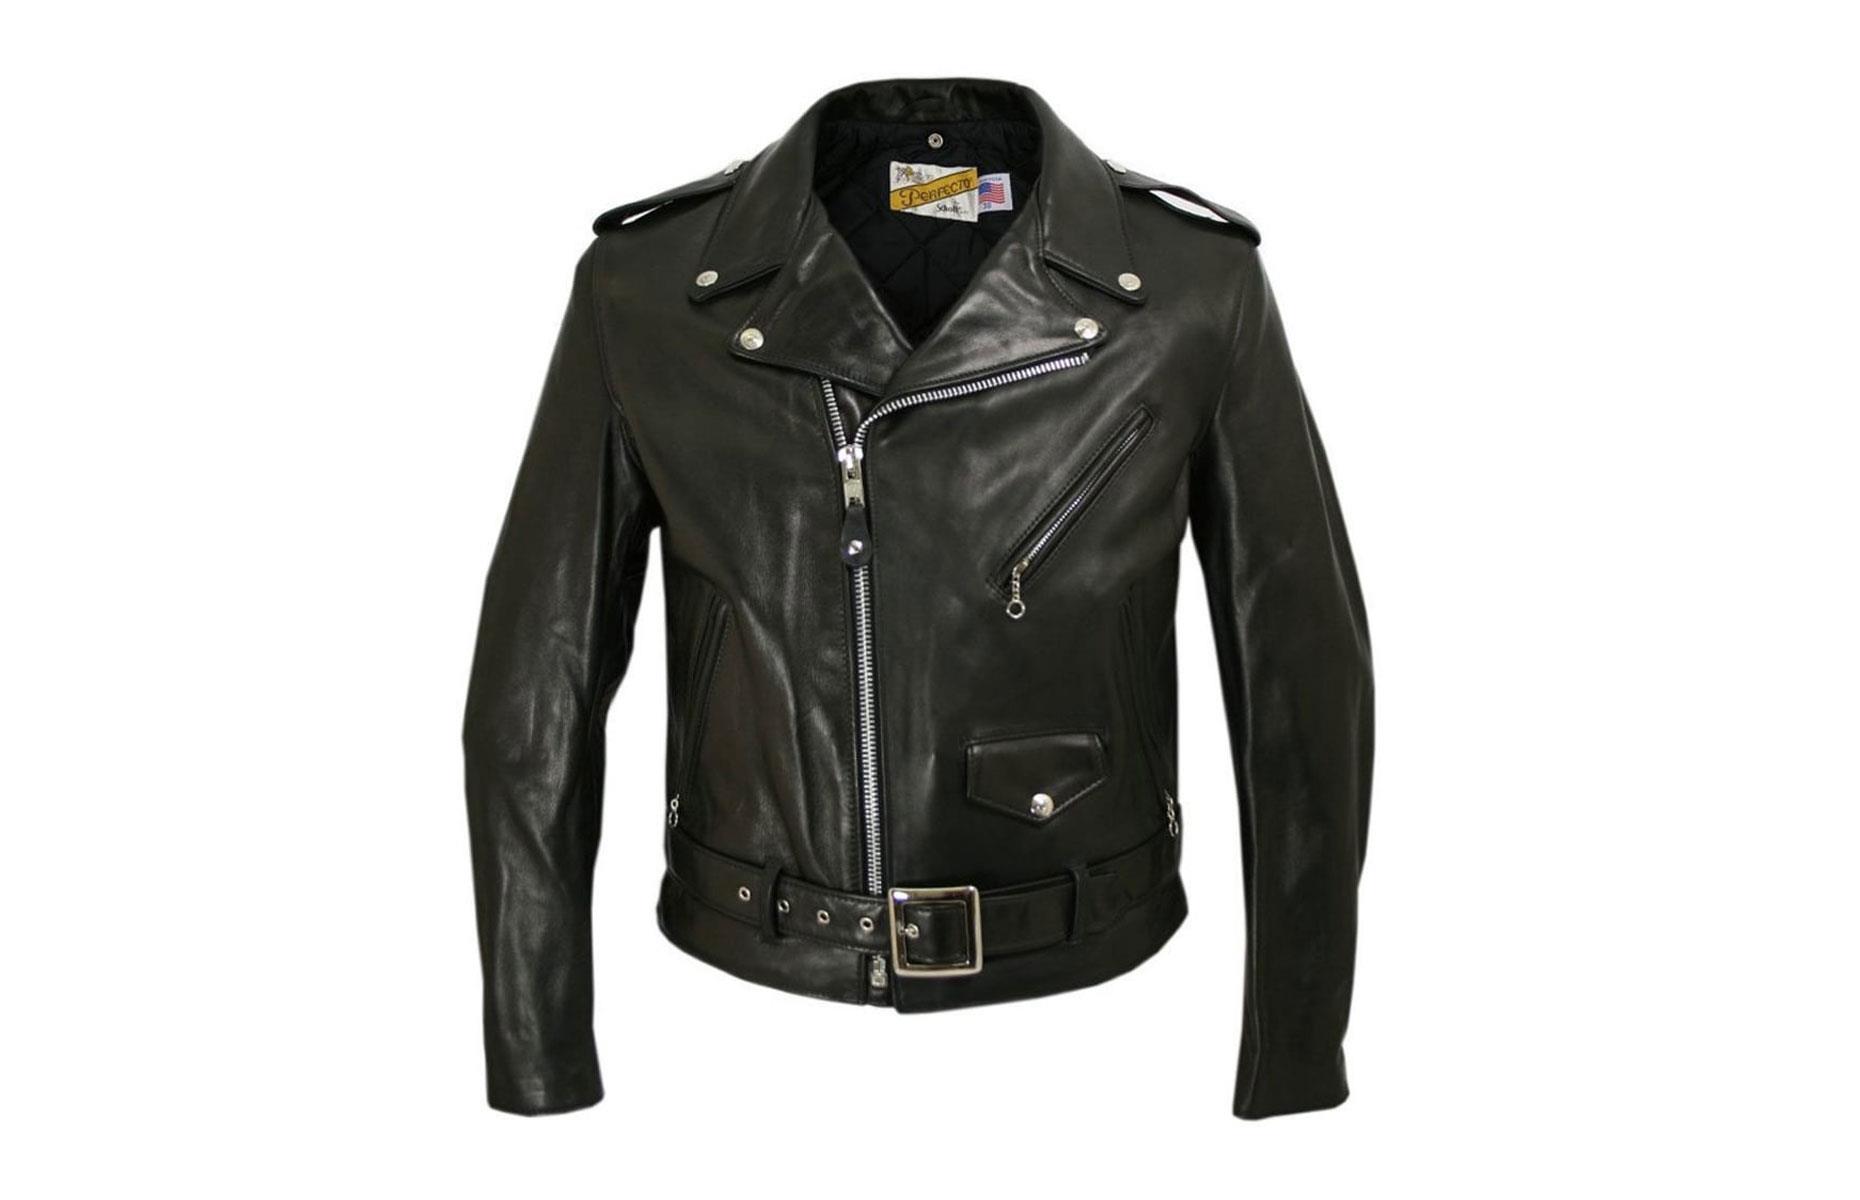 Schott Perfecto Model 118 leather jacket